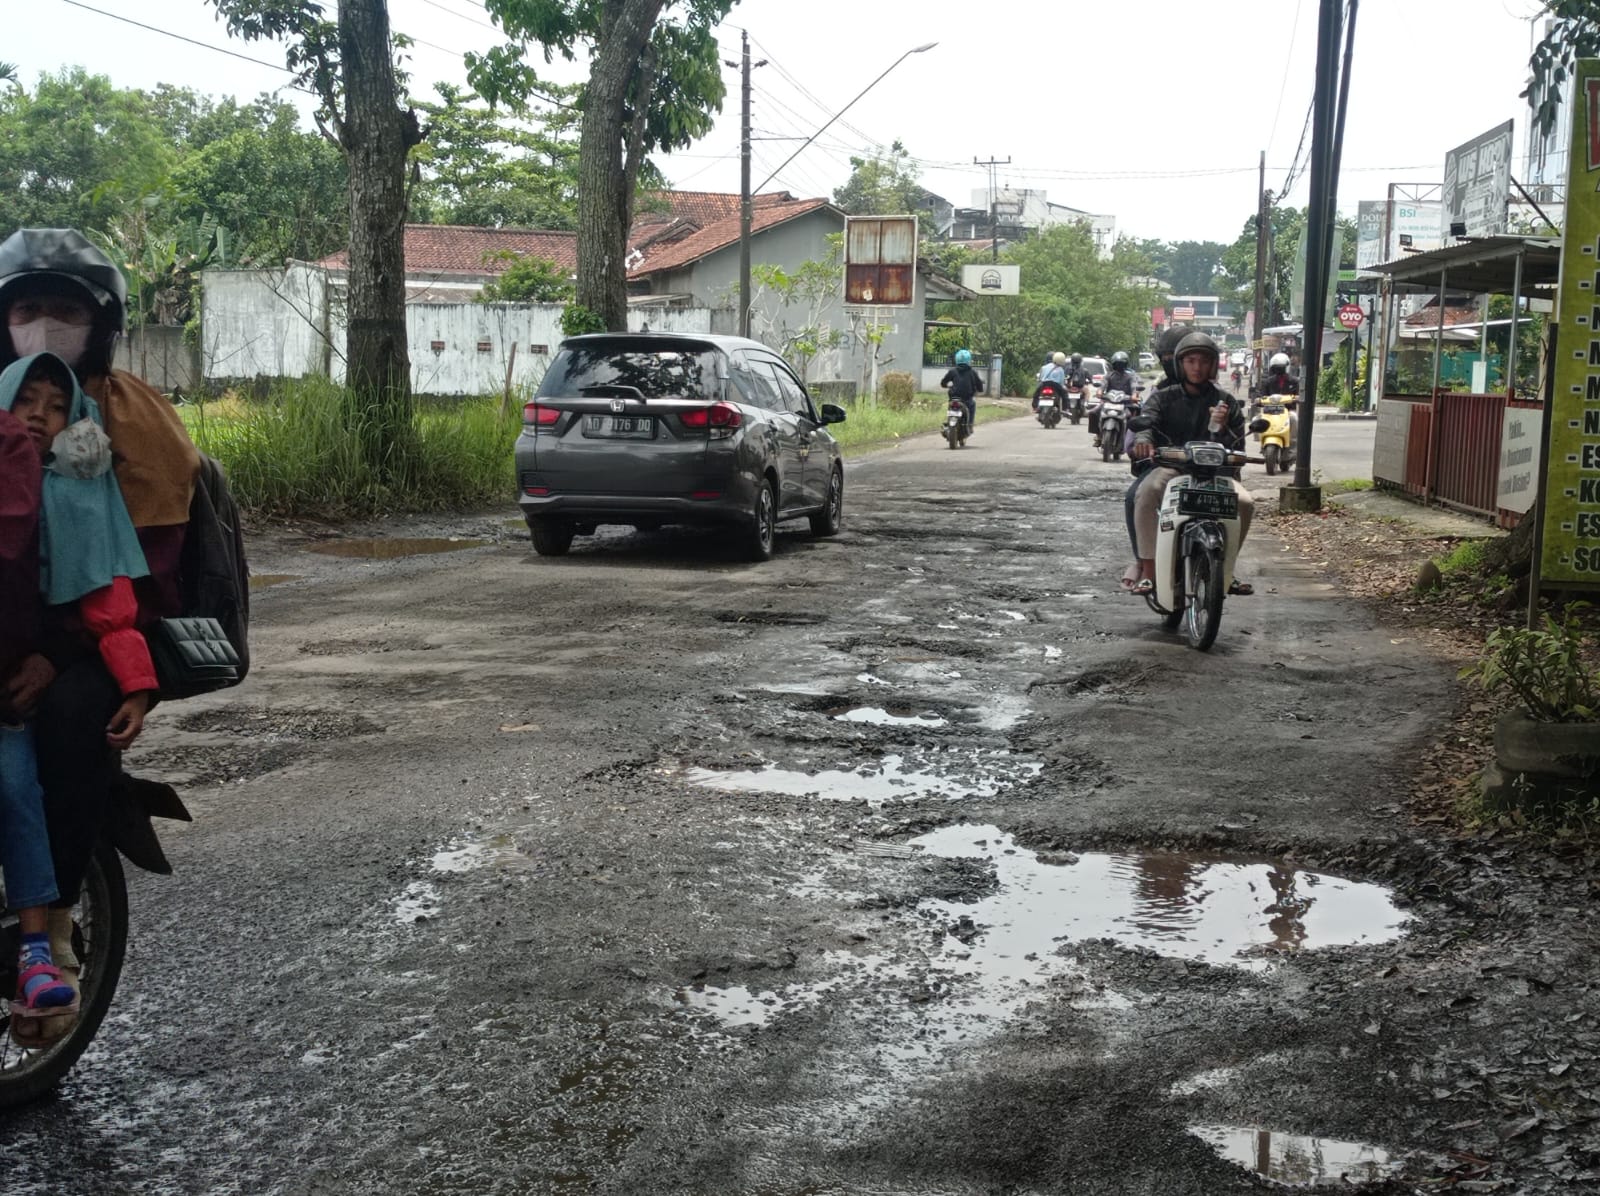 Lubang di Jalan Dr Gumbreg Purwokerto Sering Jadi Penyebab Kecelakaan, Sampai Ada Korban Jiwa